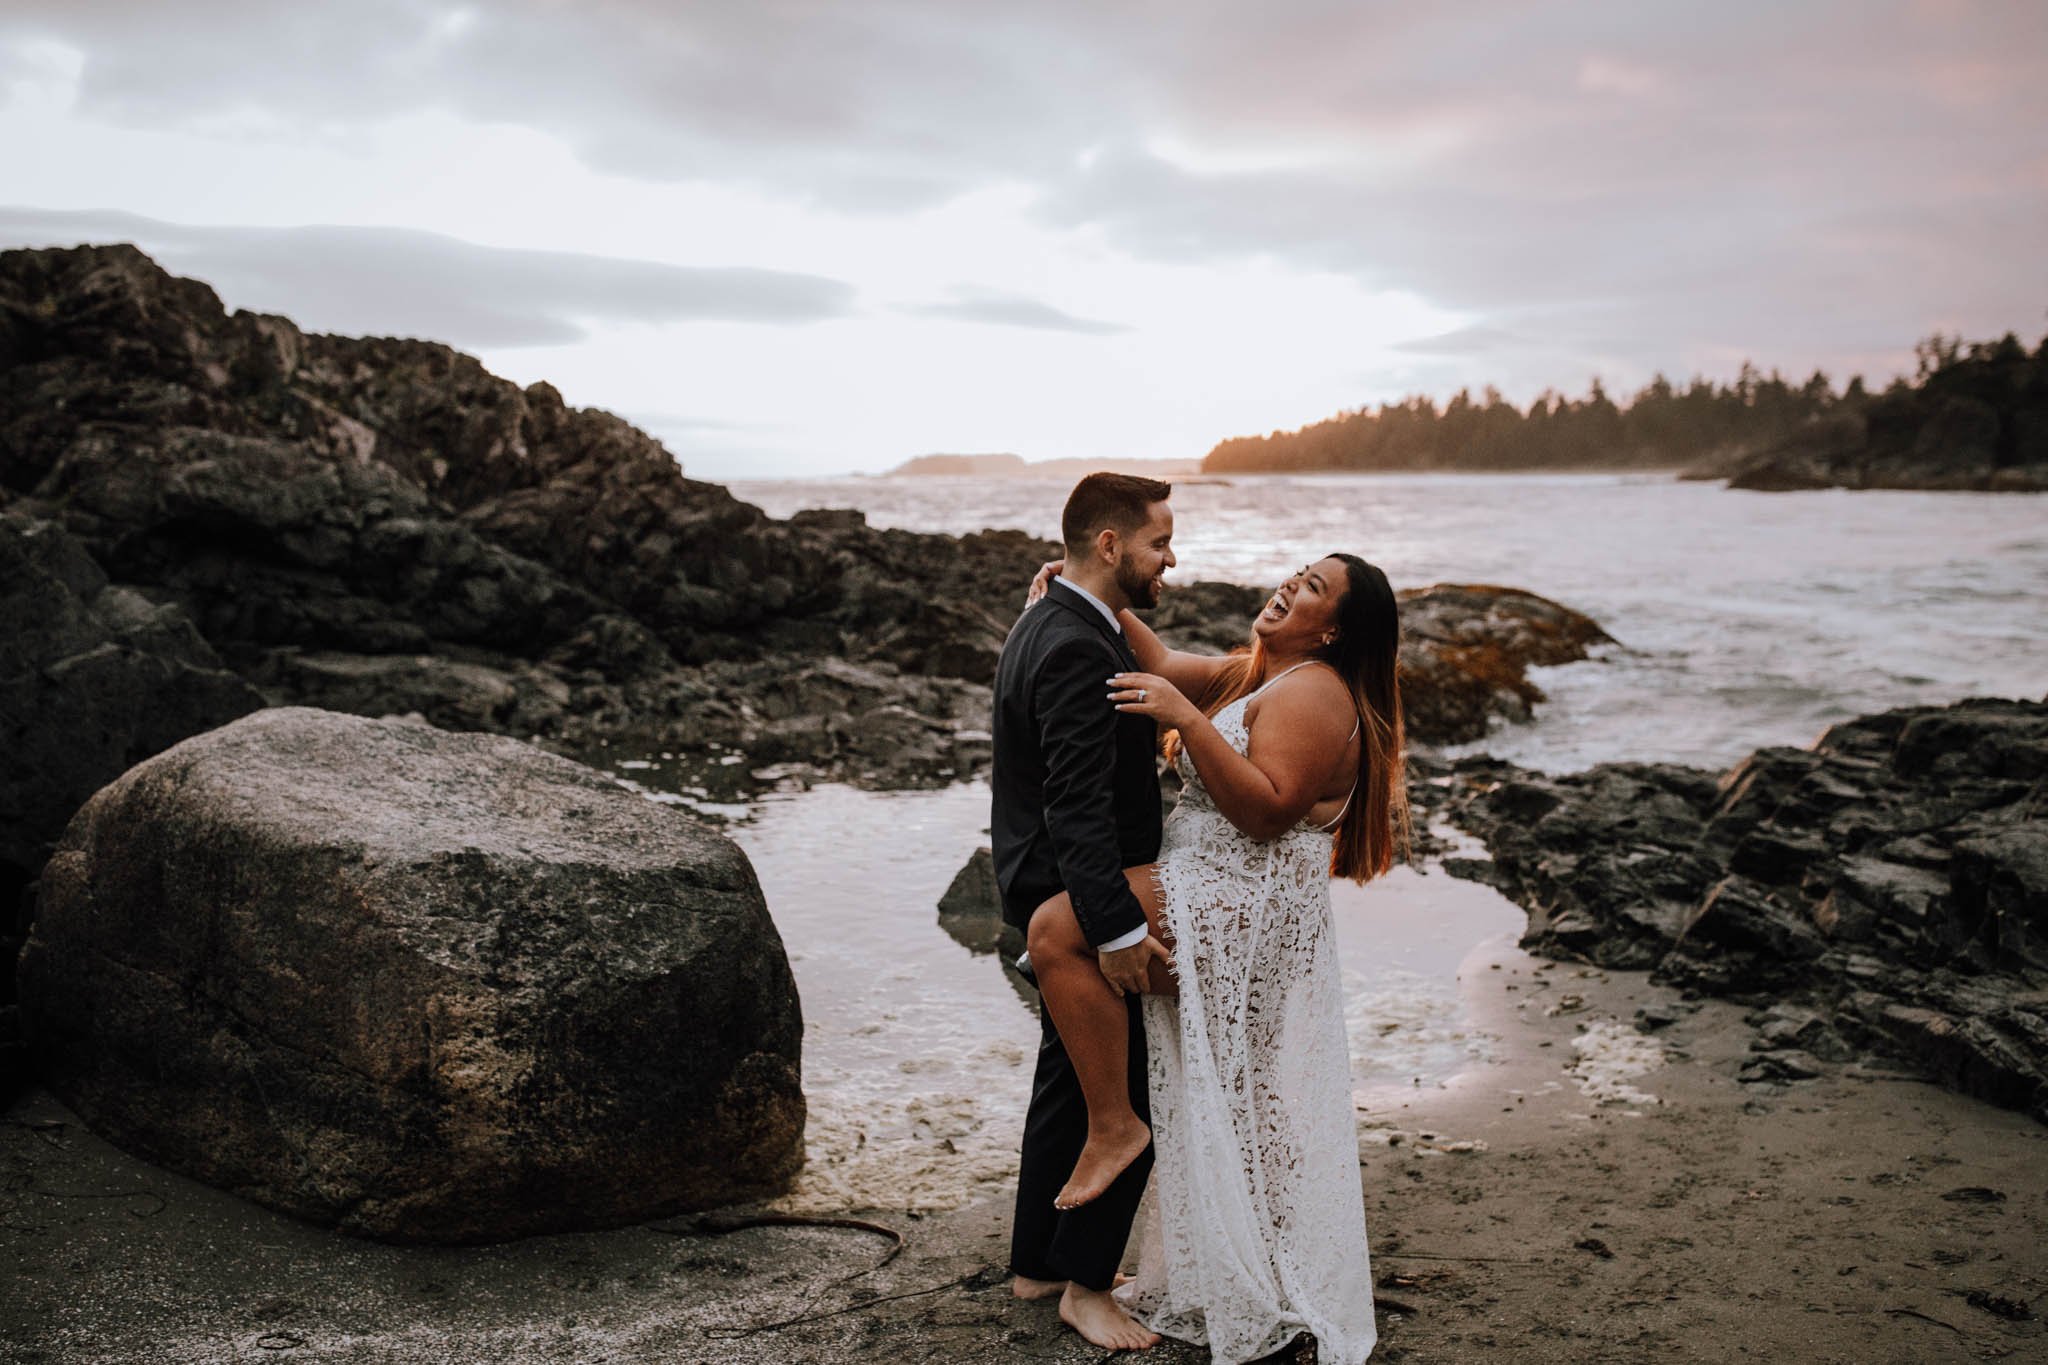 Clarize and David Elopement - Tofino Vancouver Island British Columbia - Elyse Anna Photography-2784.jpg